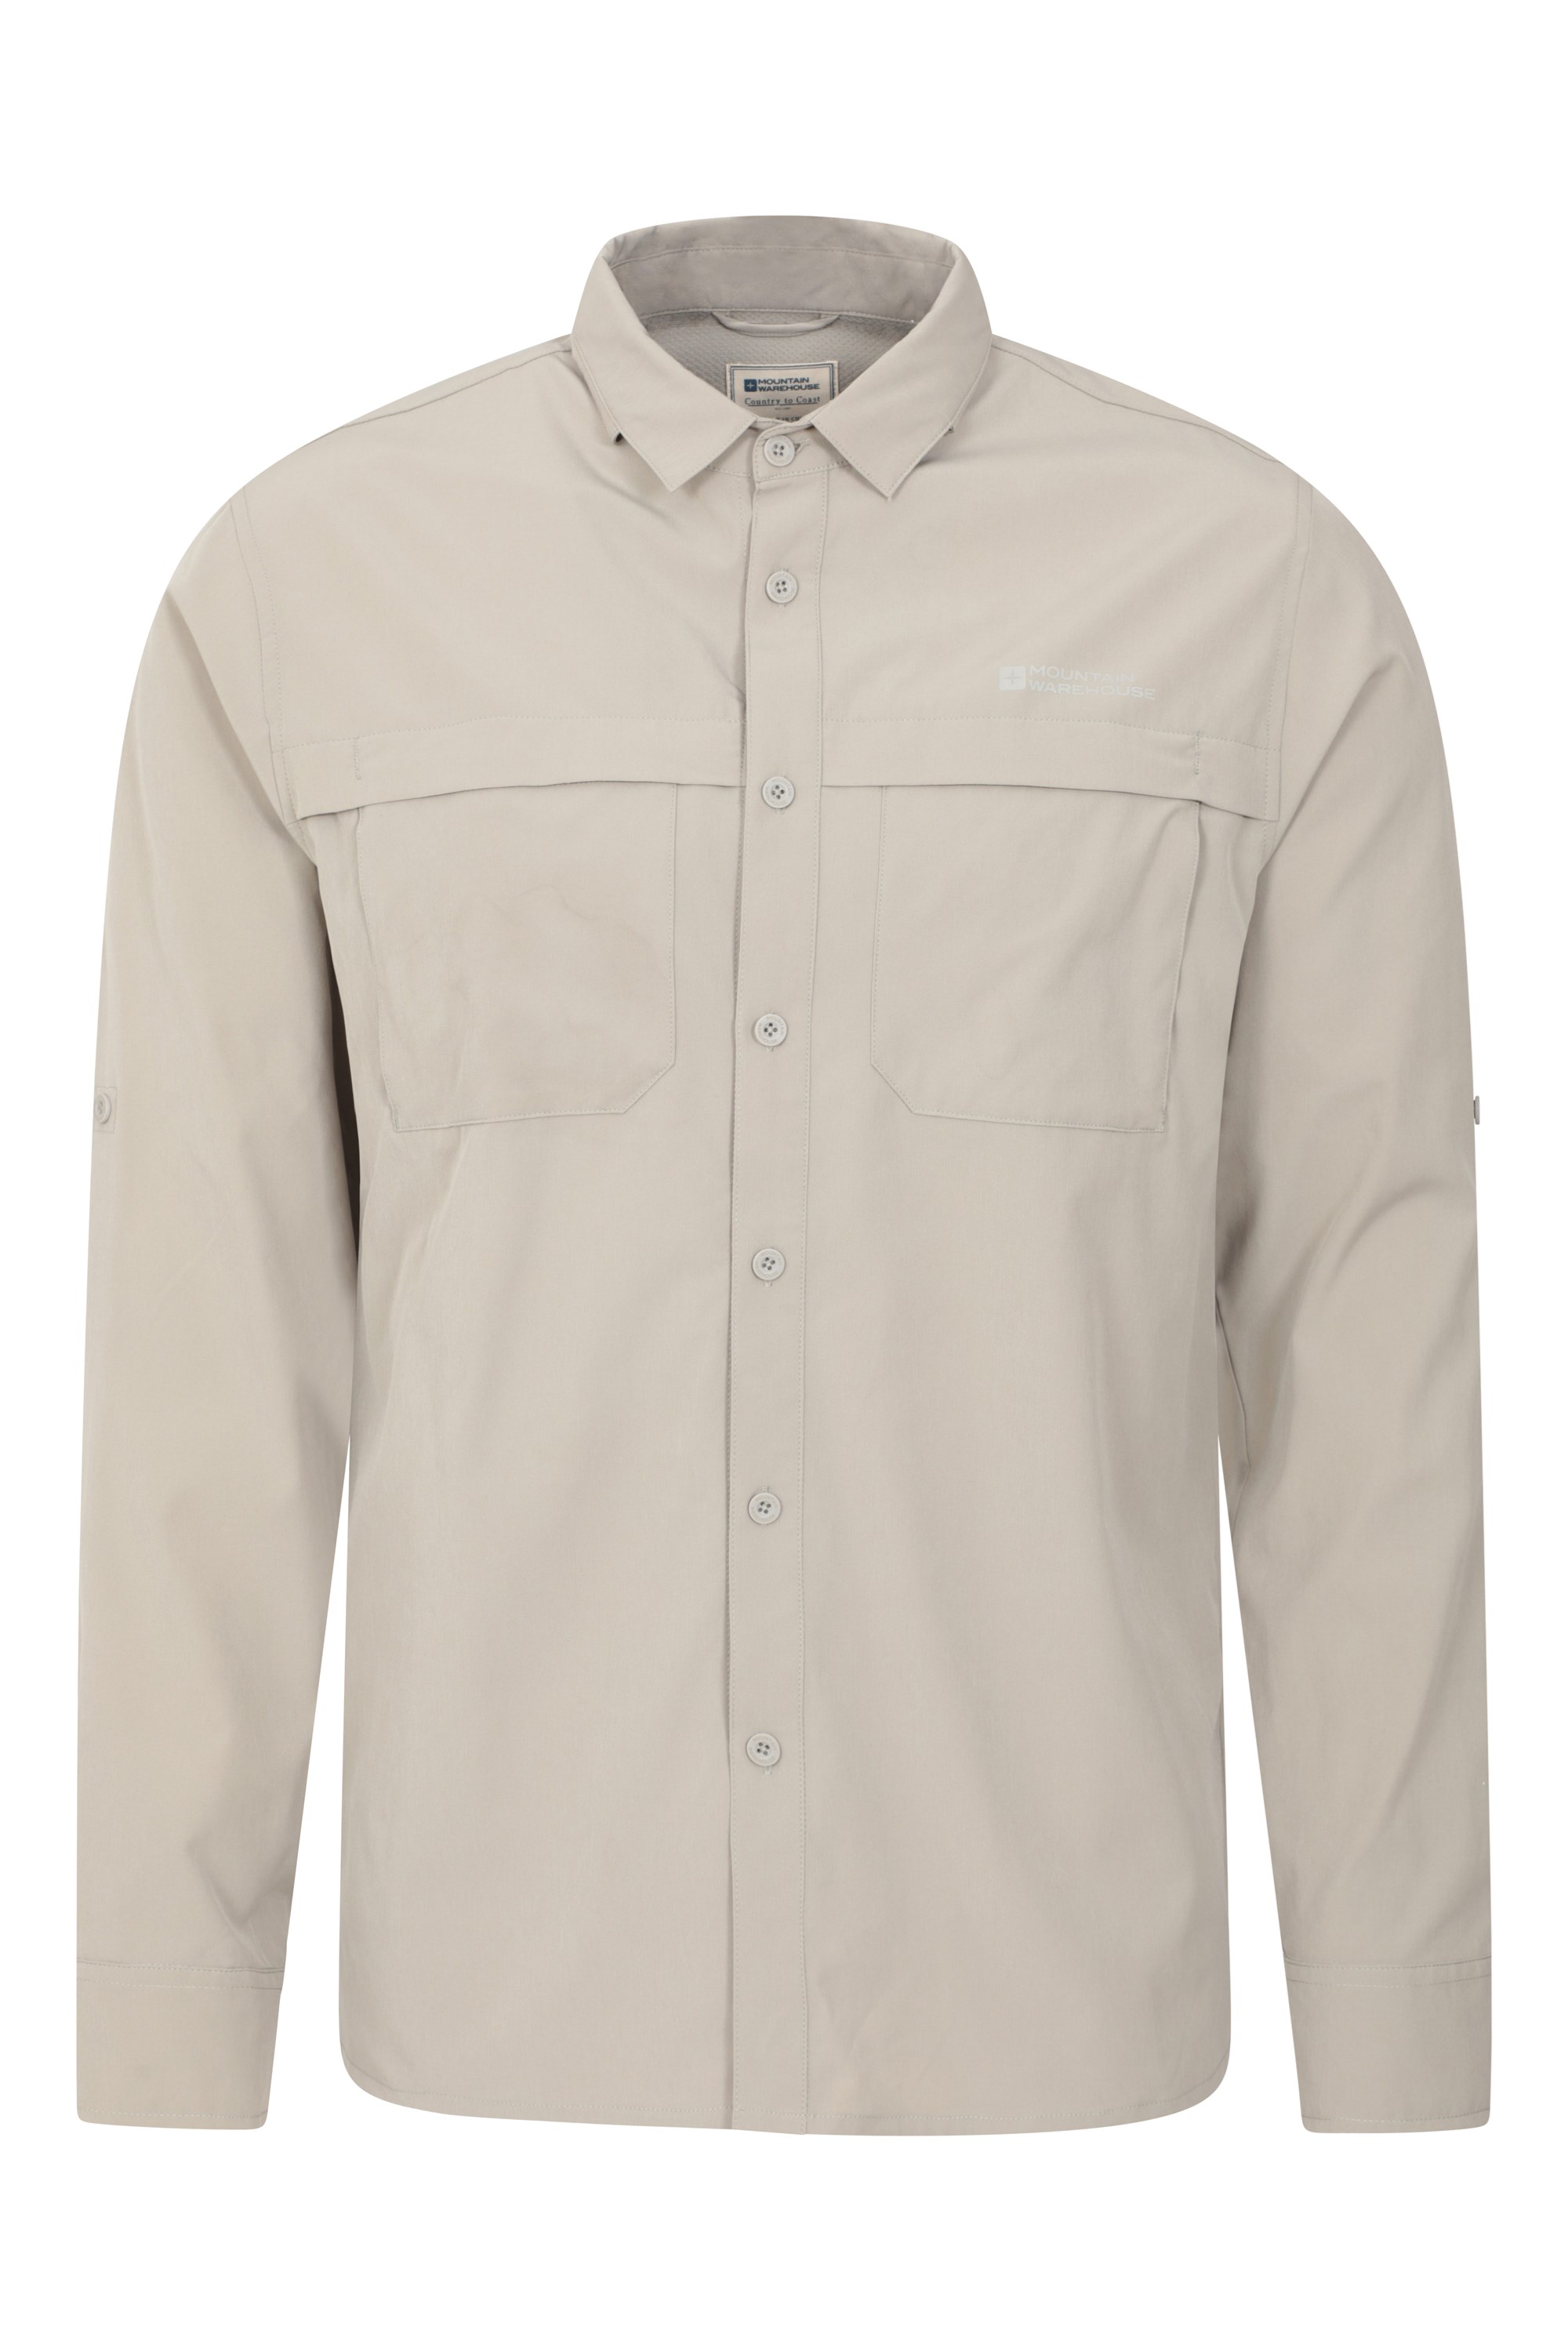 Mountain Warehouse MOUNTAIN WAREHOUSE Breathable Walking Shirt Mens Short Sleeve Zip Pocket Size L 